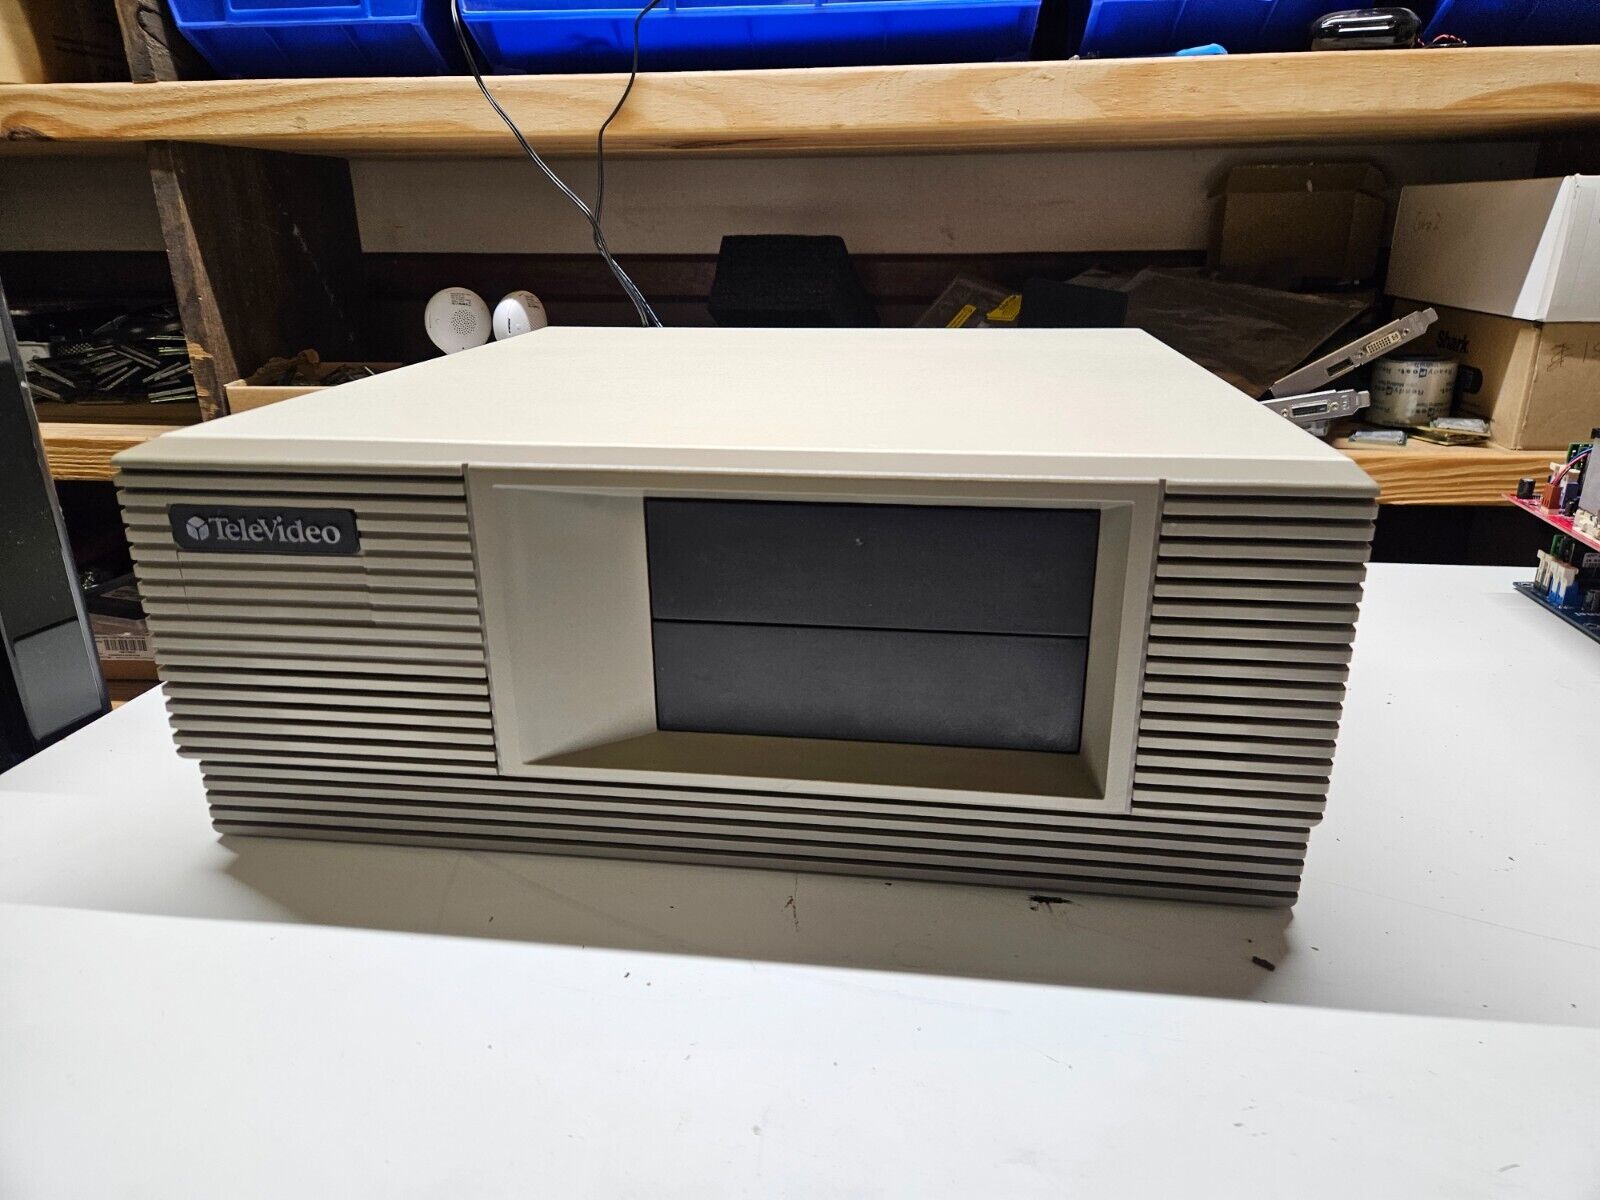 Televideo TeleCAT-286 Vintage Desktop Computer AT Based Intel 80286 CPU READ